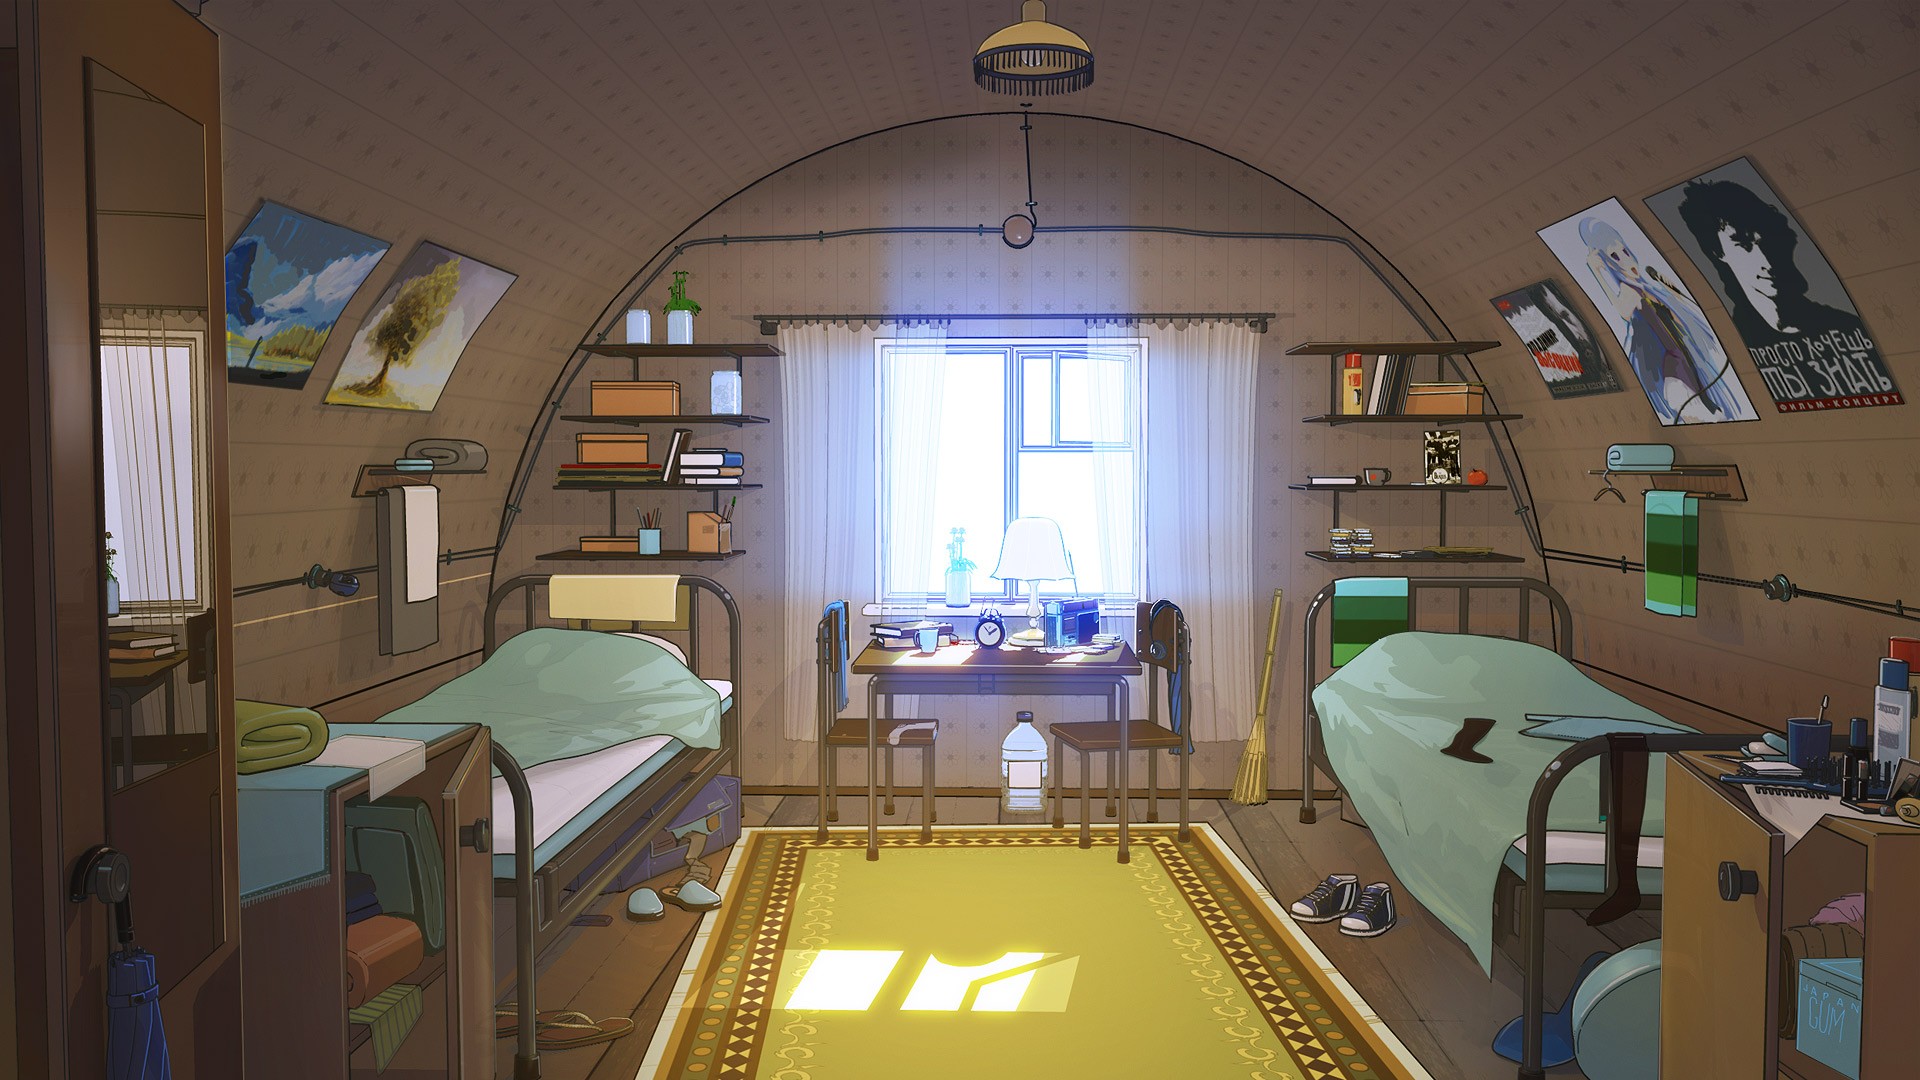 General 1920x1080 Everlasting Summer (visual novel) bed bedroom carpet indoors anime interior